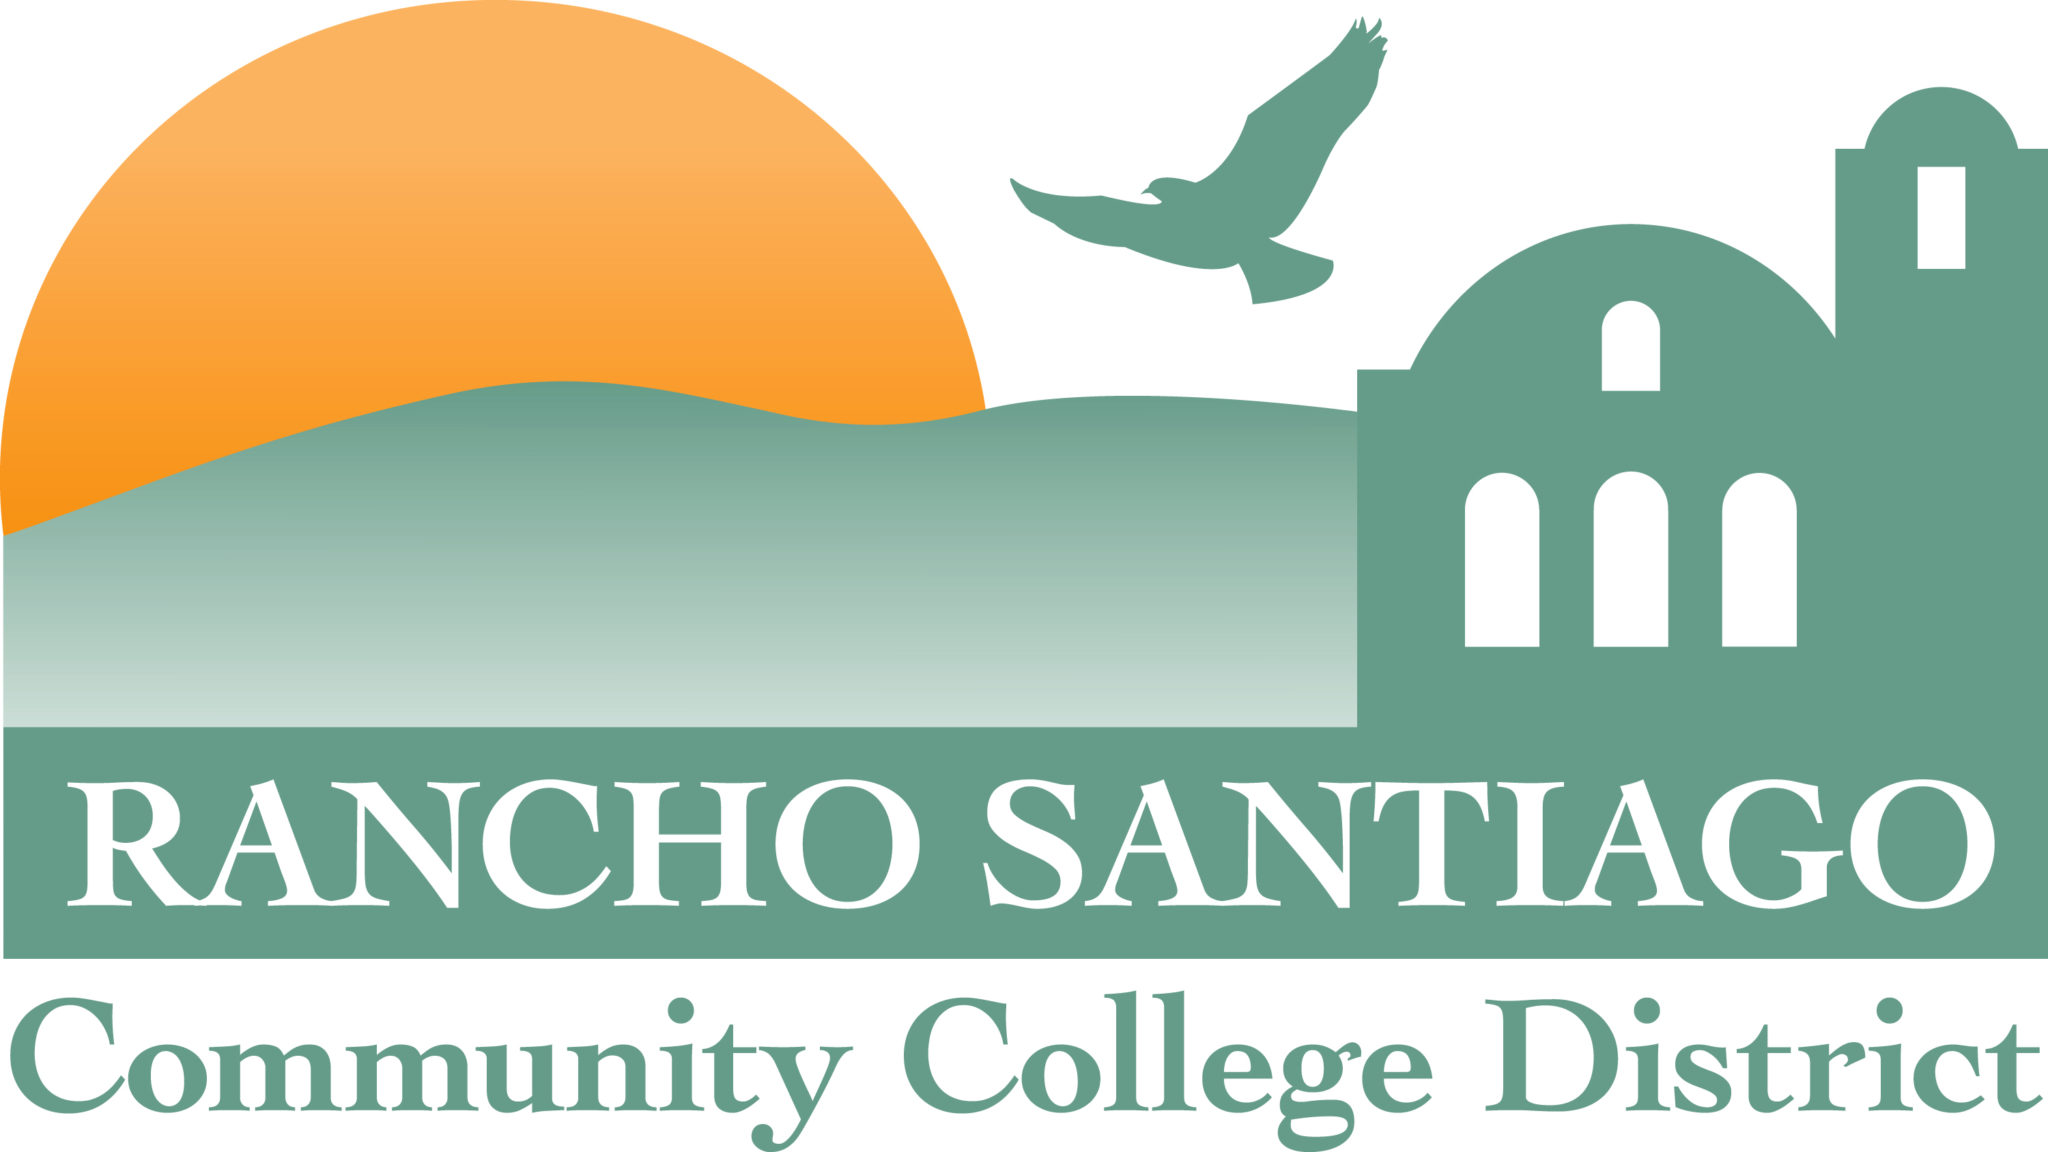 Rancho Santiago Community College District logo